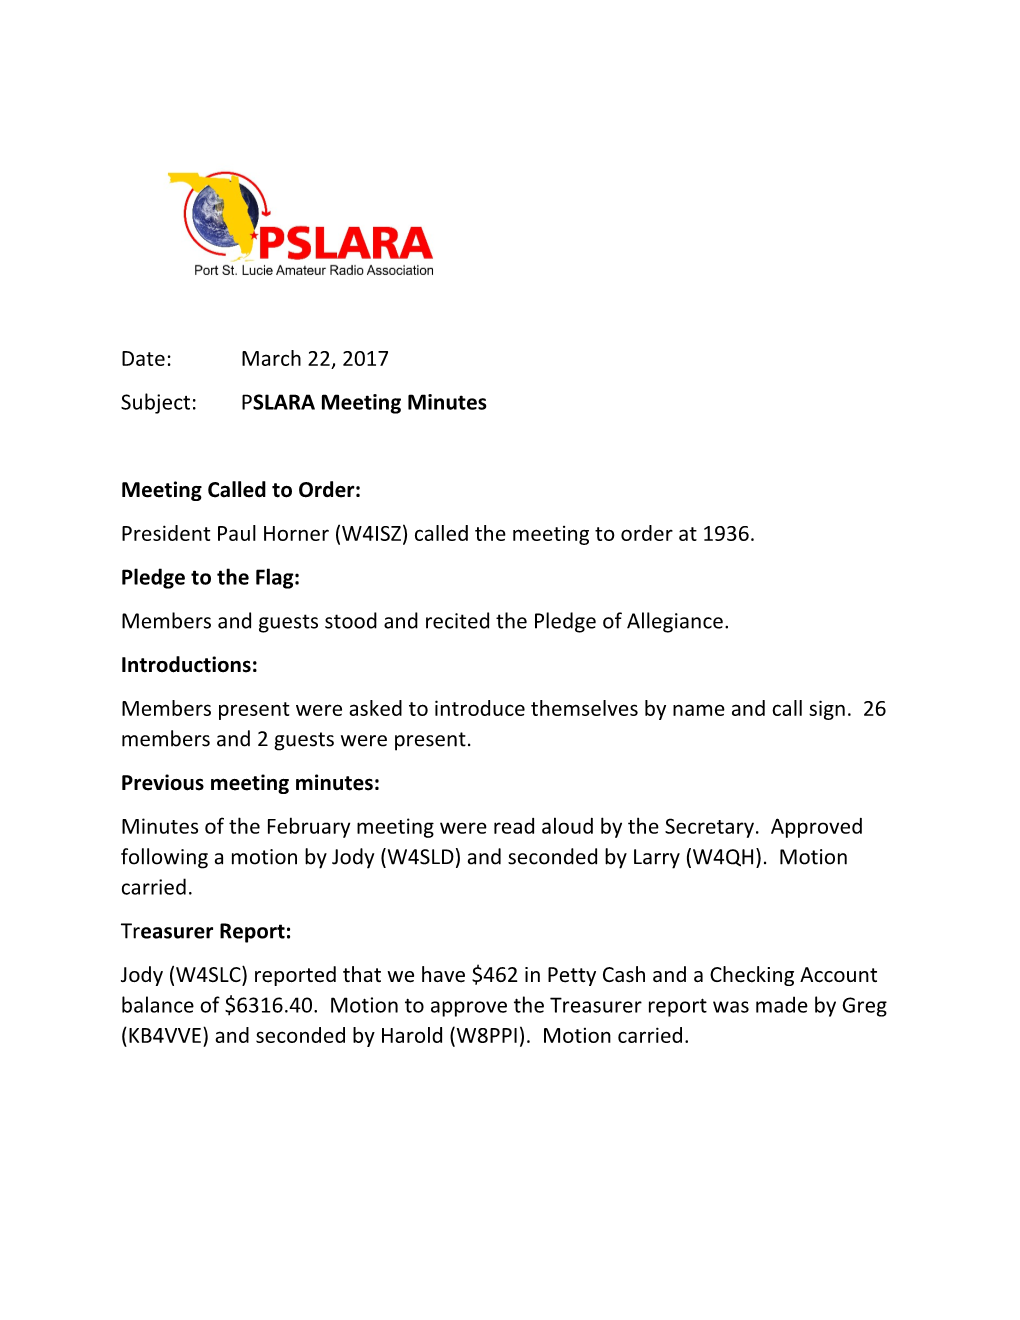 Subject:P SLARA Meeting Minutes